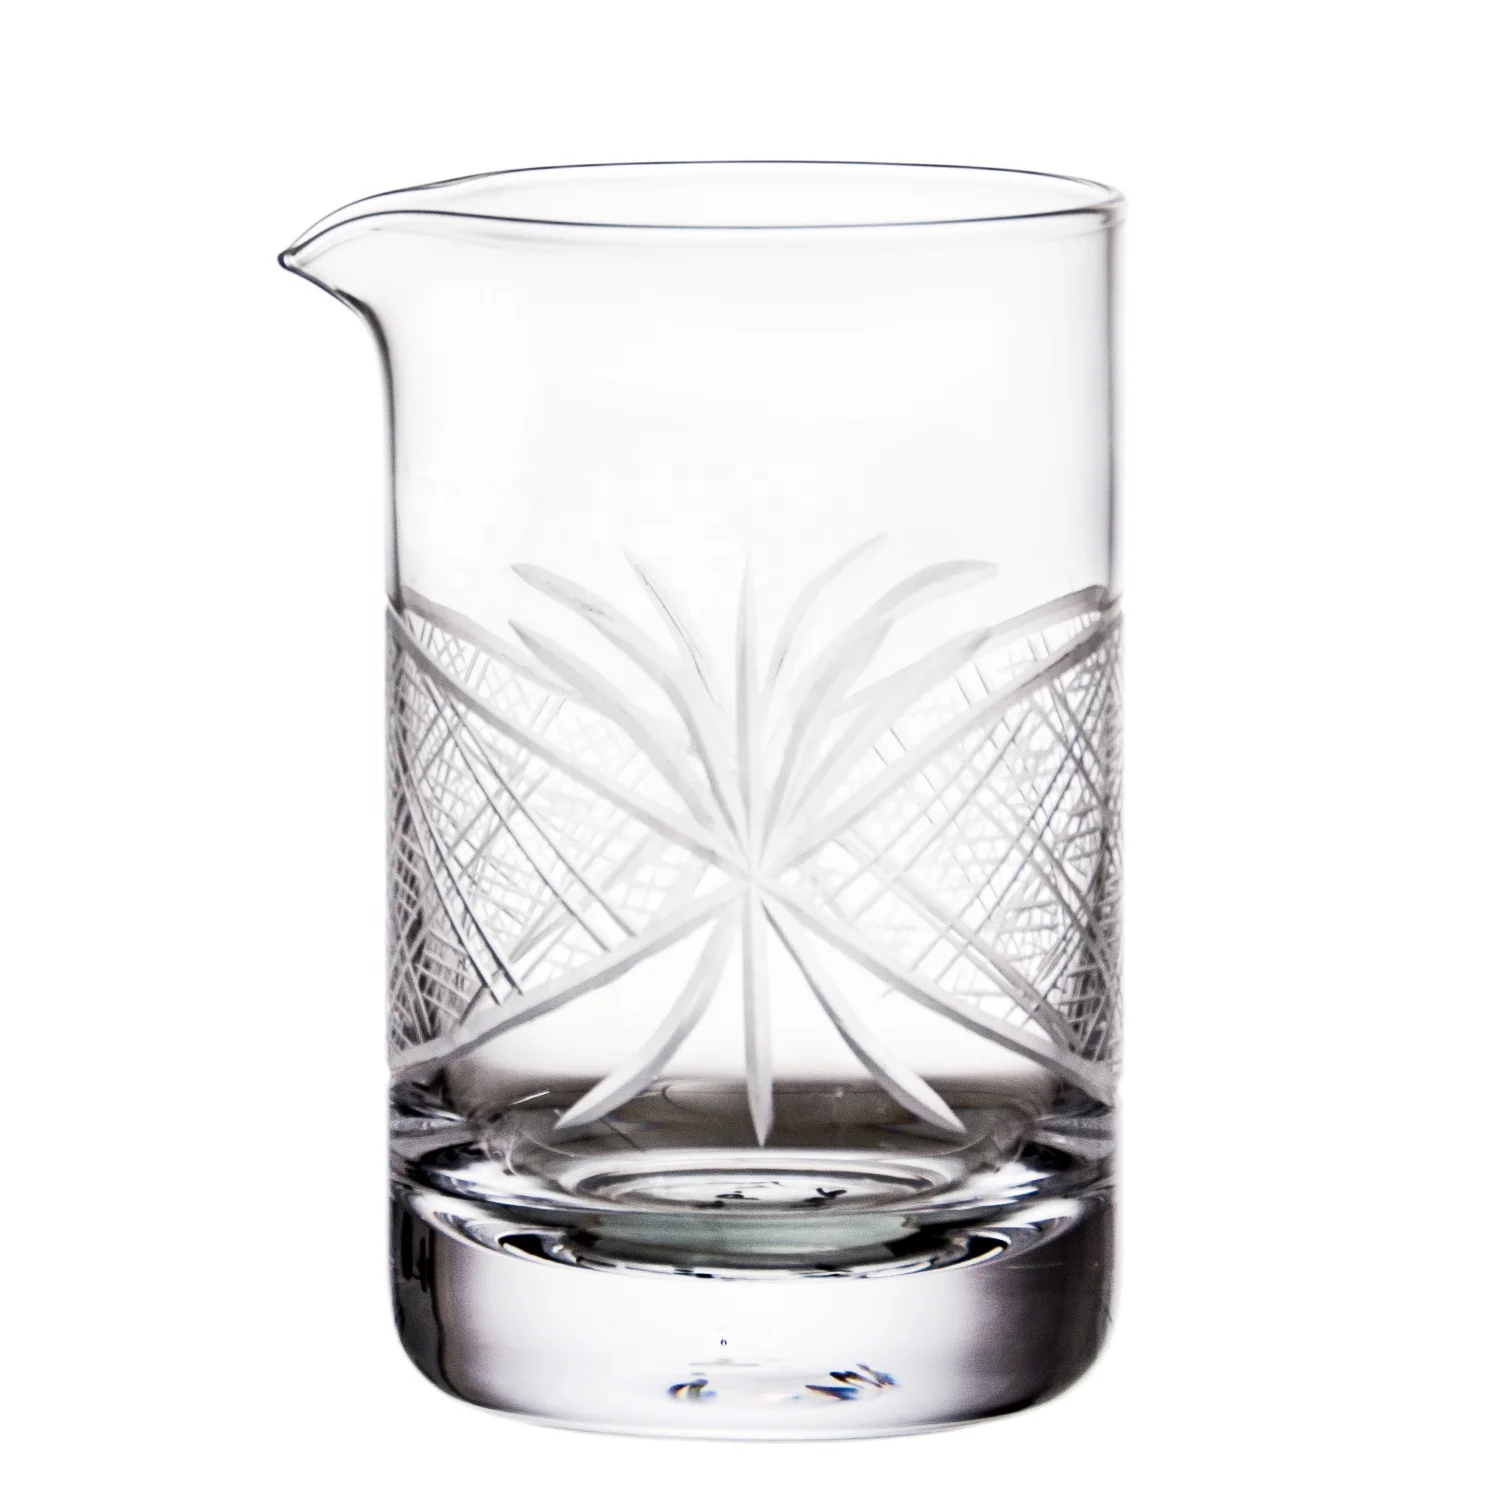 
Bar Tools Handmade High Quality 500 ml Engraving Bar Glassware Crystal Cocktail Mixing Glass 